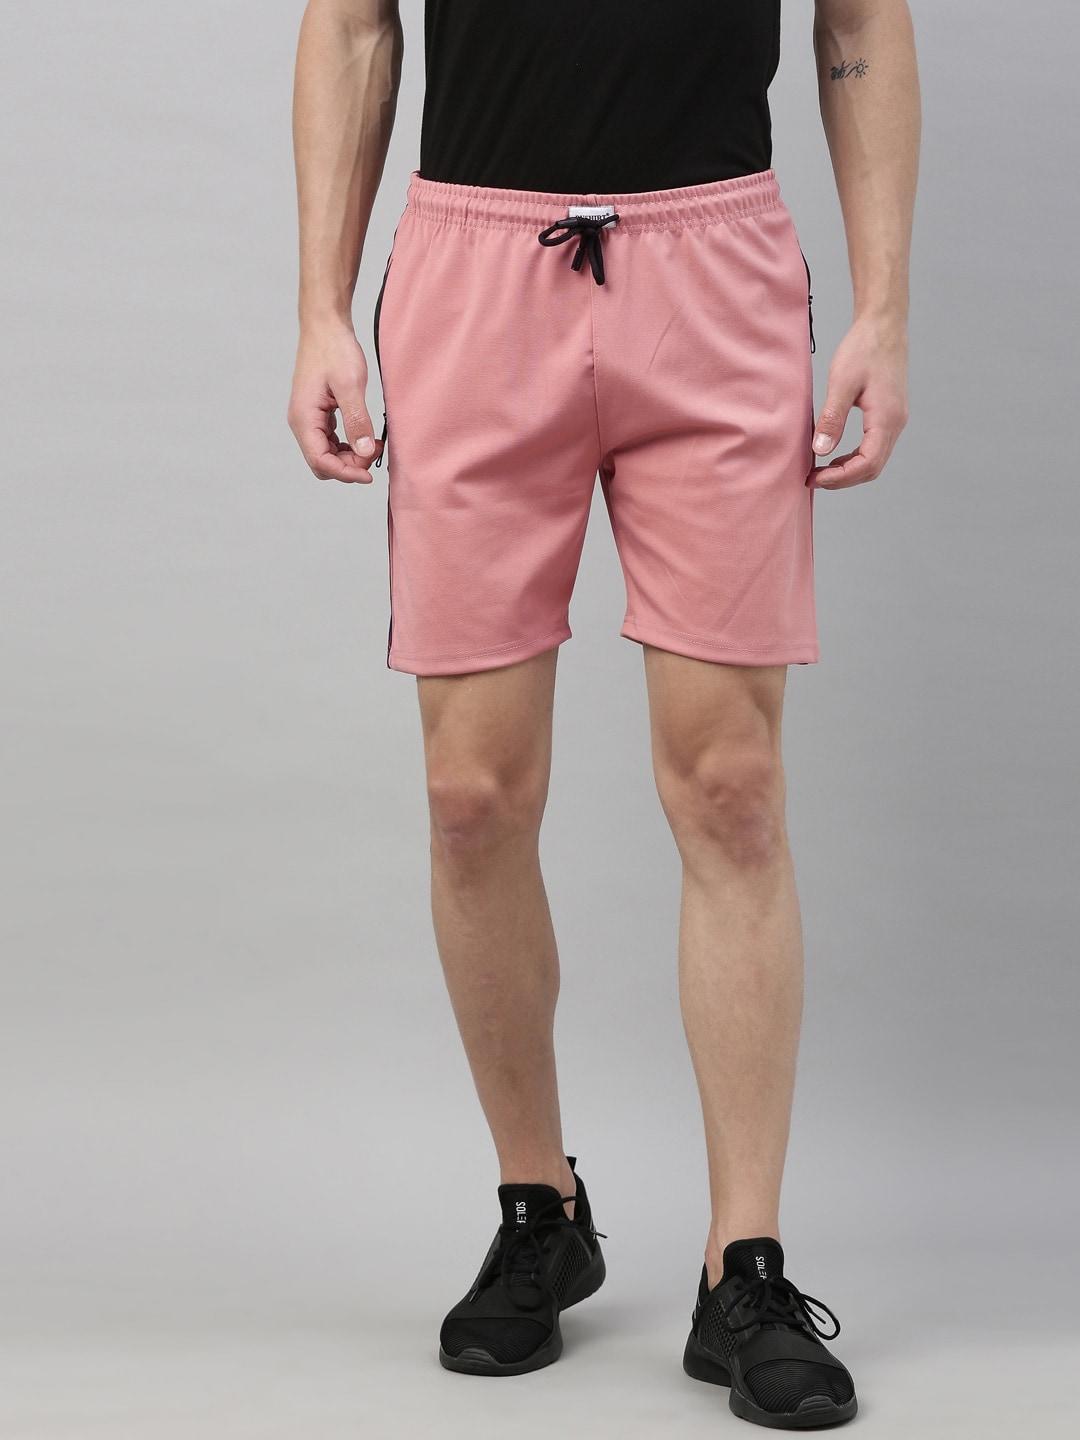 bushirt-men-peach-coloured-solid-regular-fit-sports-shorts